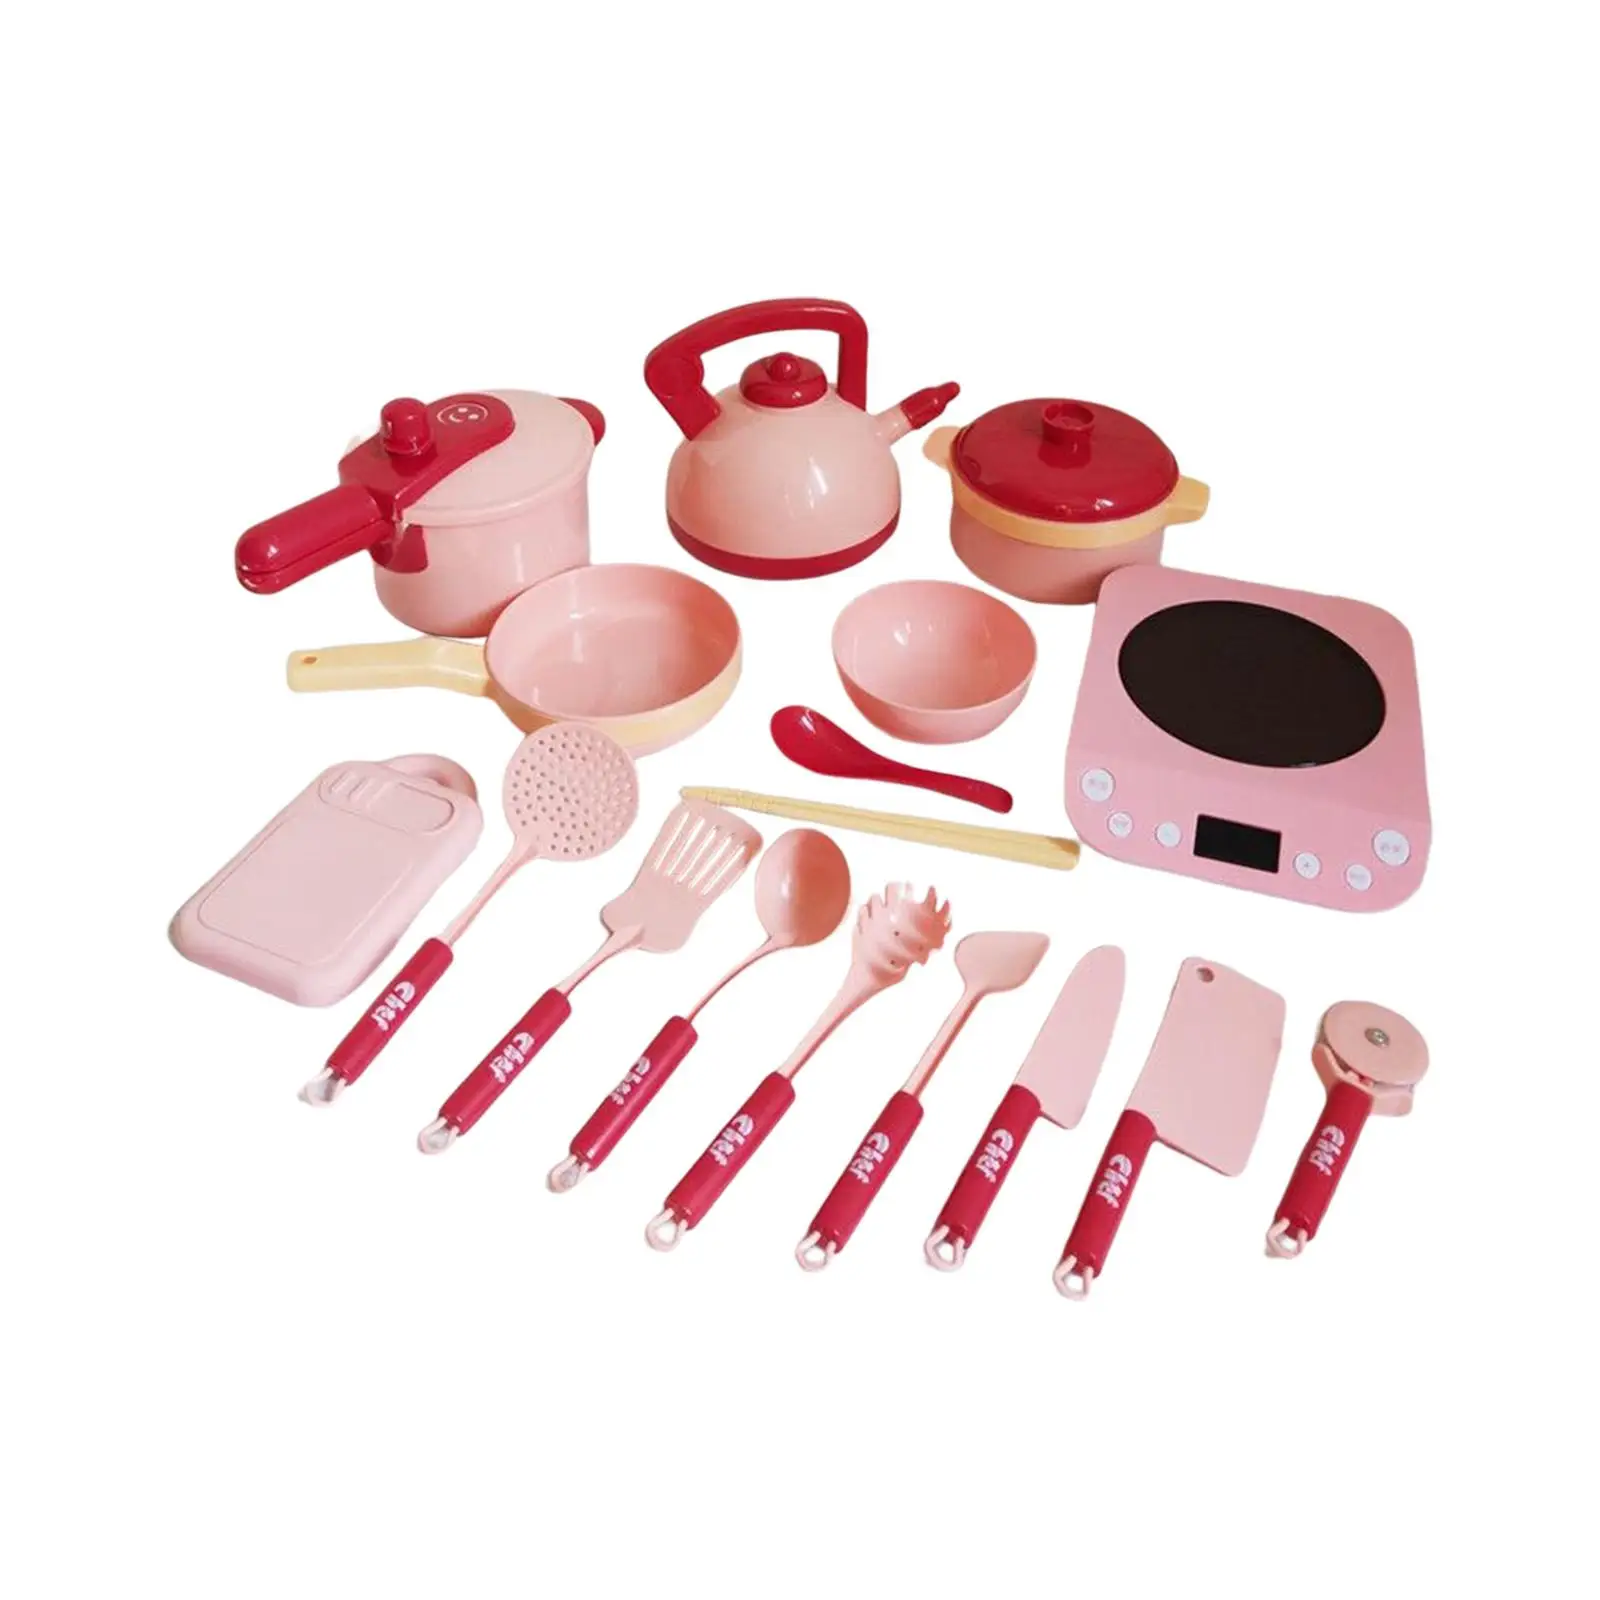 17 Pieces Kitchen Accessories Set Cooking Utensils Toys for Children